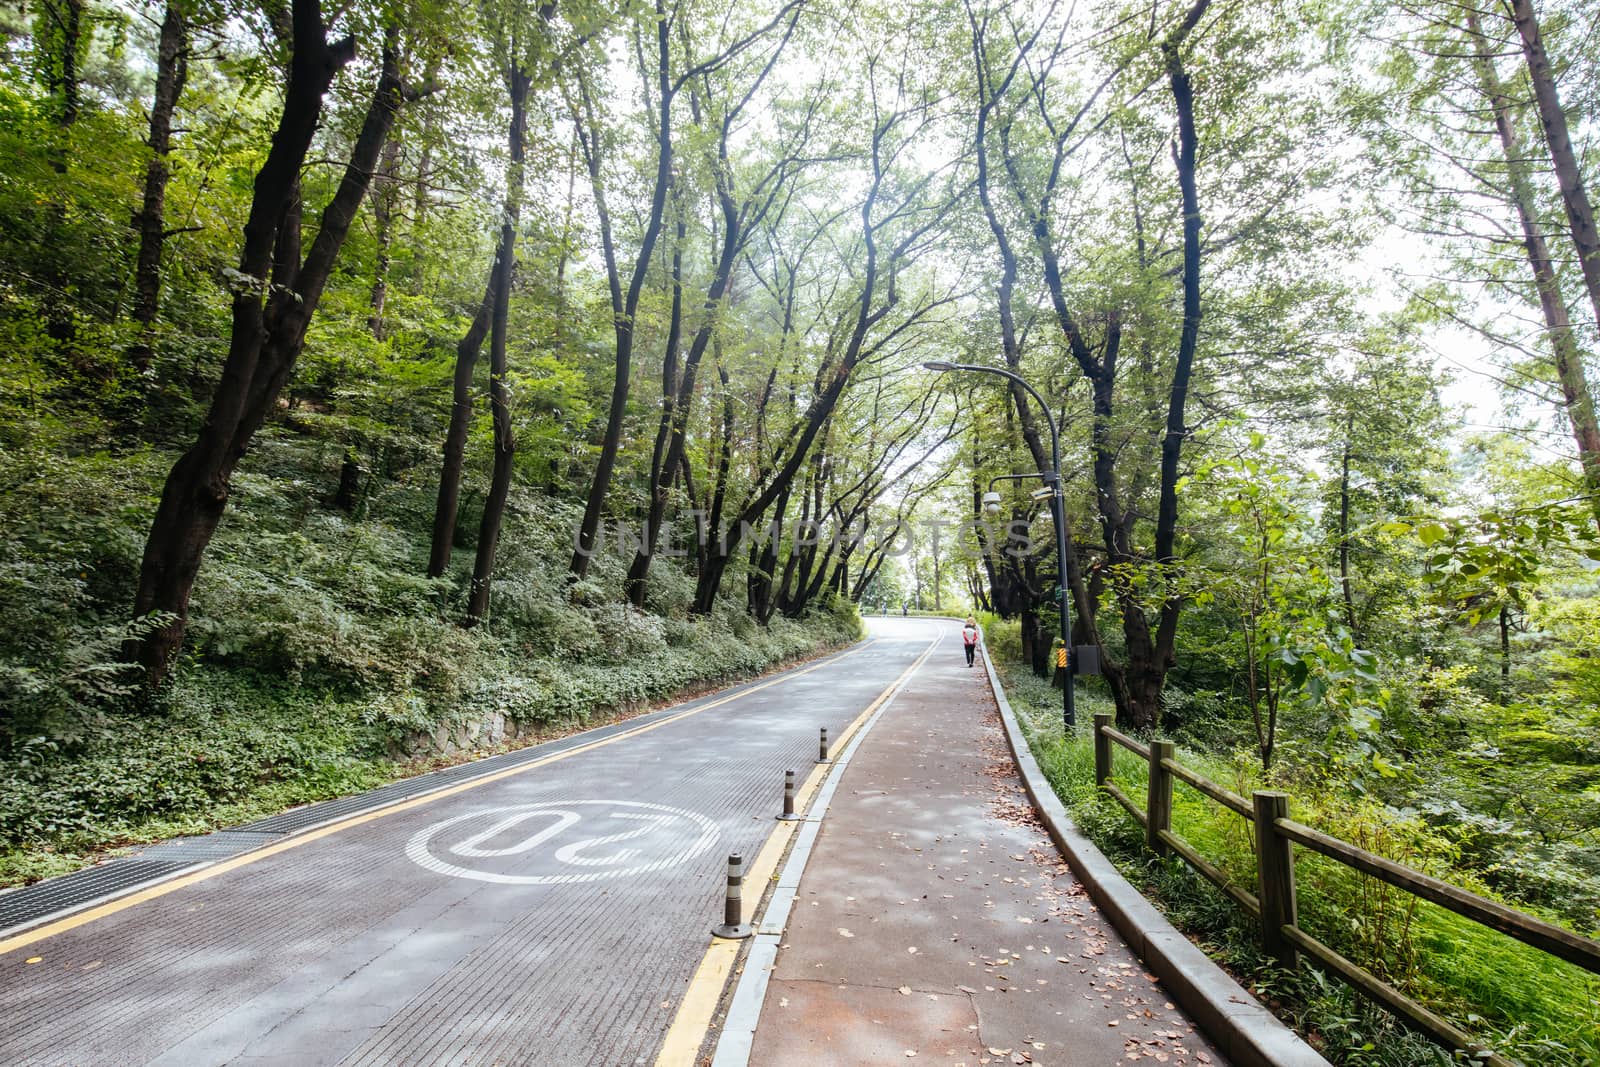 Road ascending to Namsan Tower in Namsan Park in Seoul, South Korea